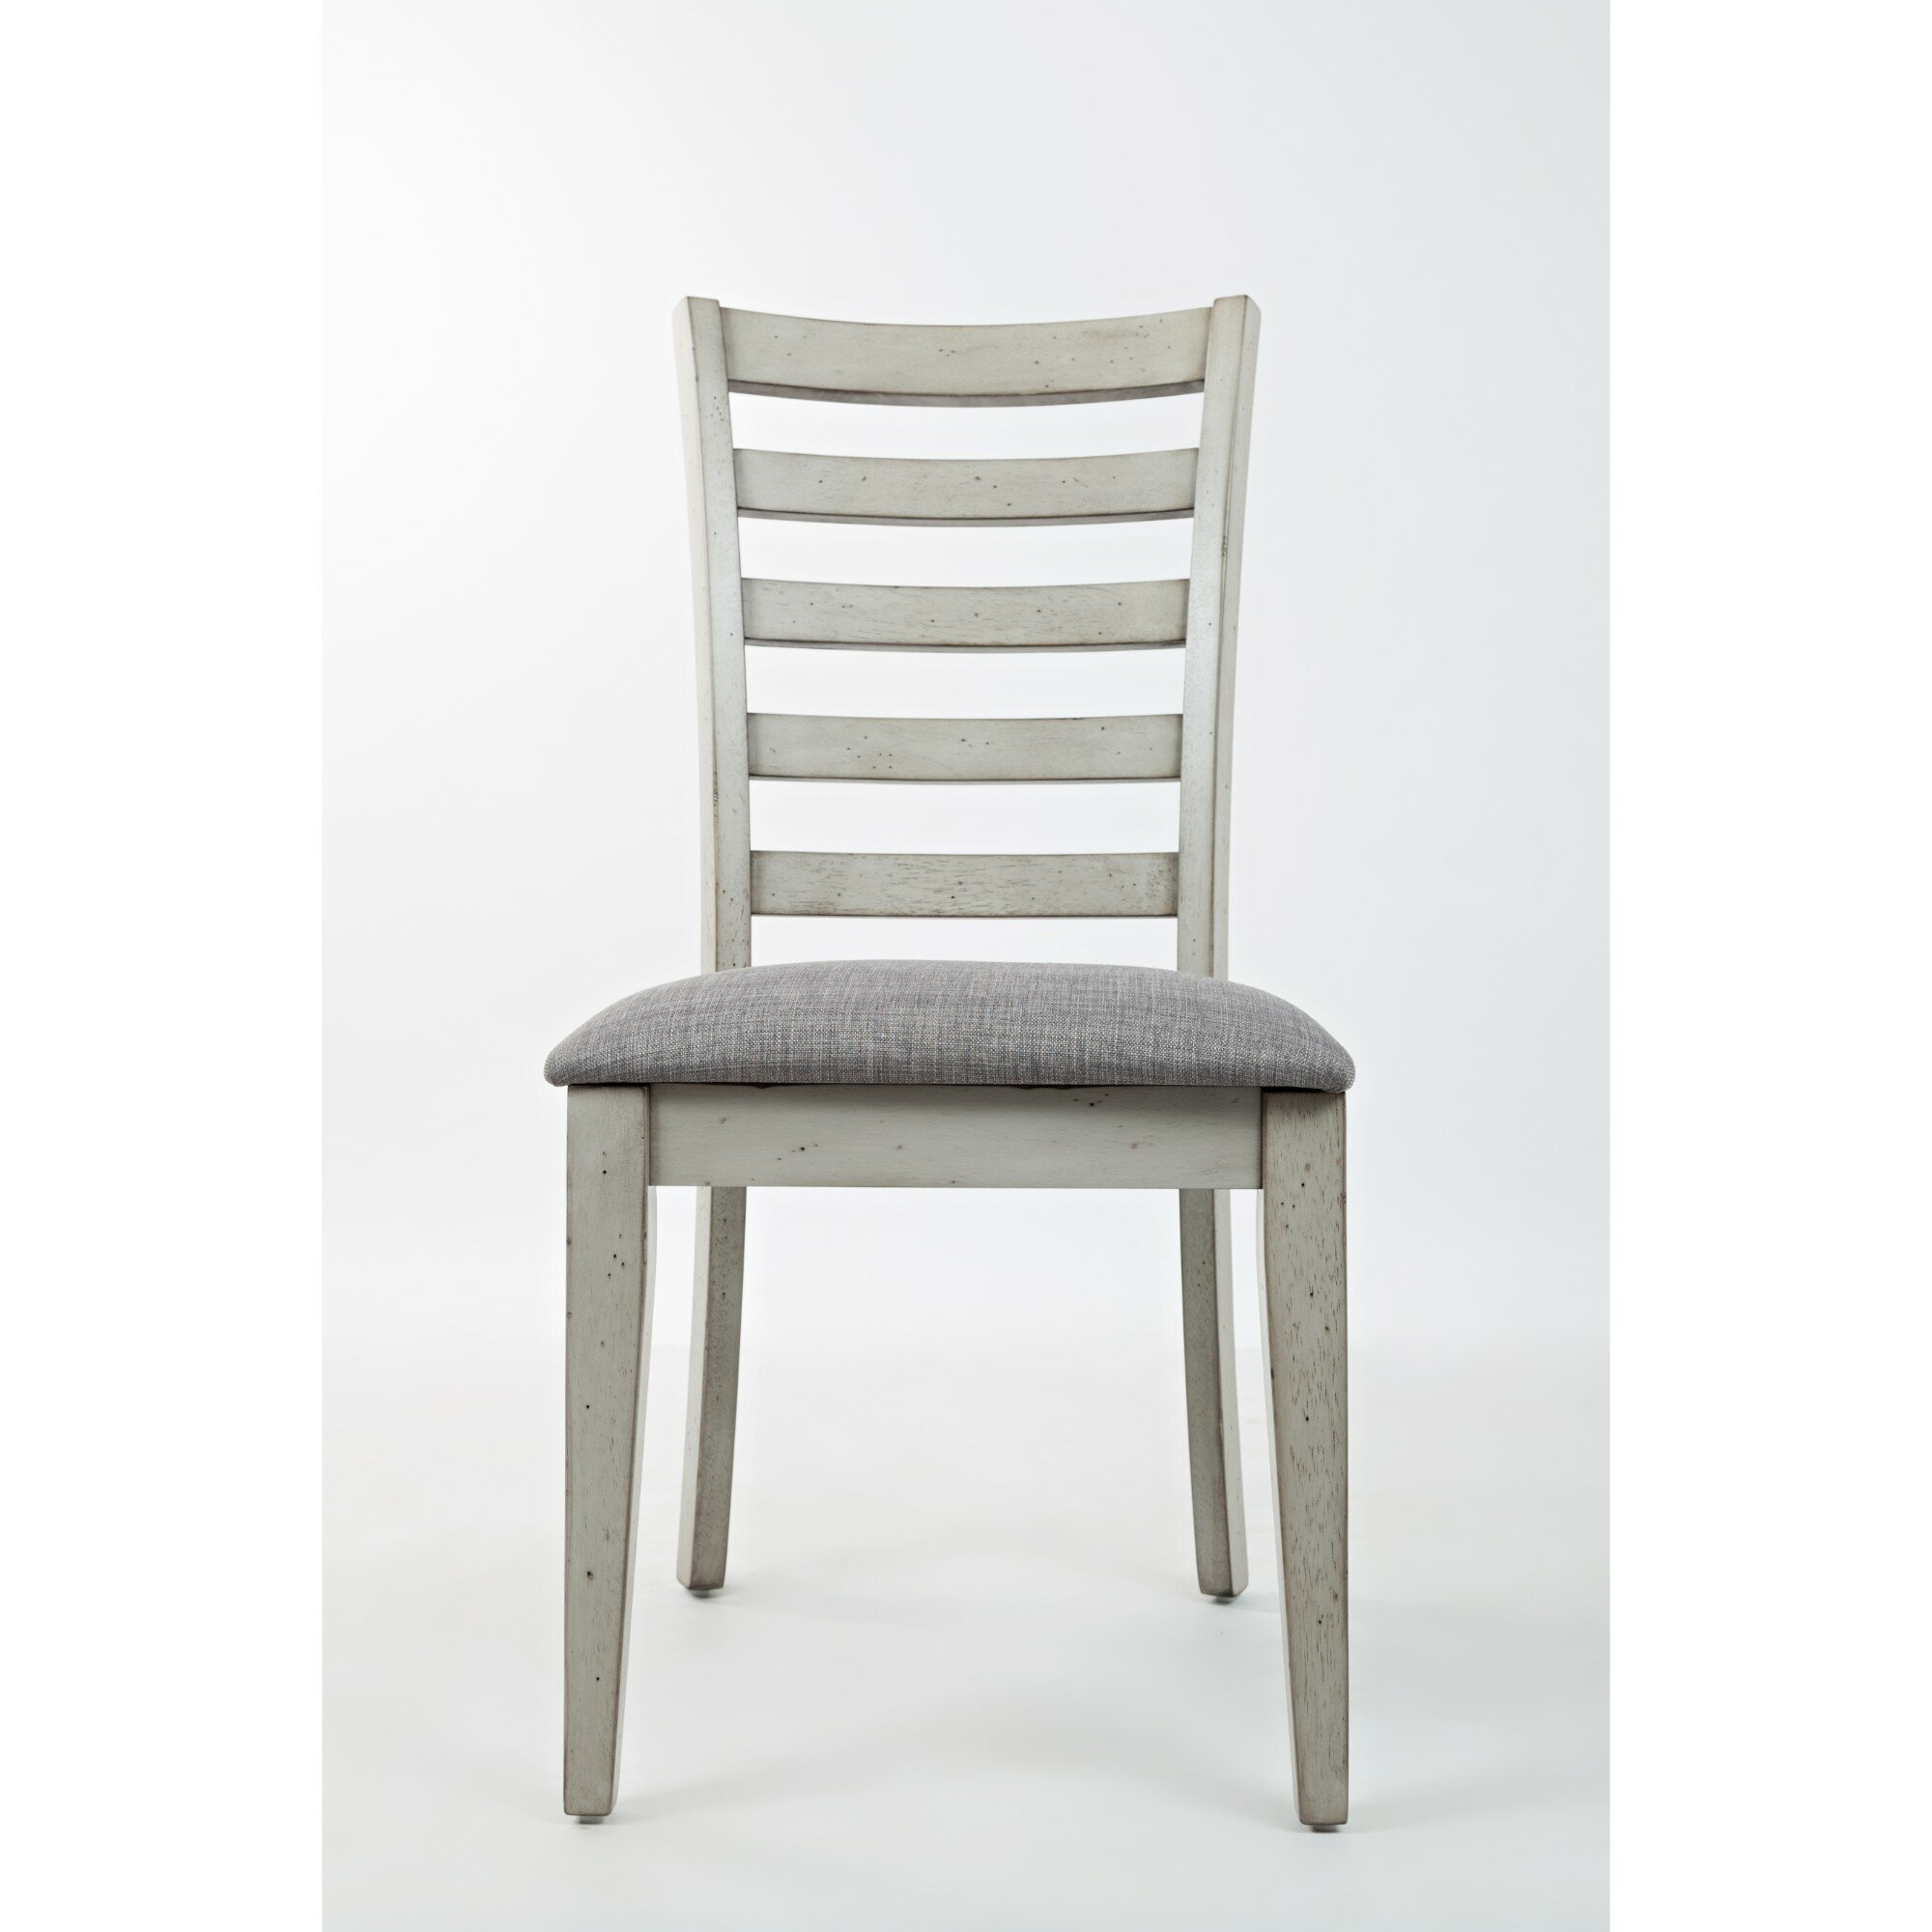 Longshore Tides Julius Ladder Back Upholstered Dining Chair Set of 2 | eBay